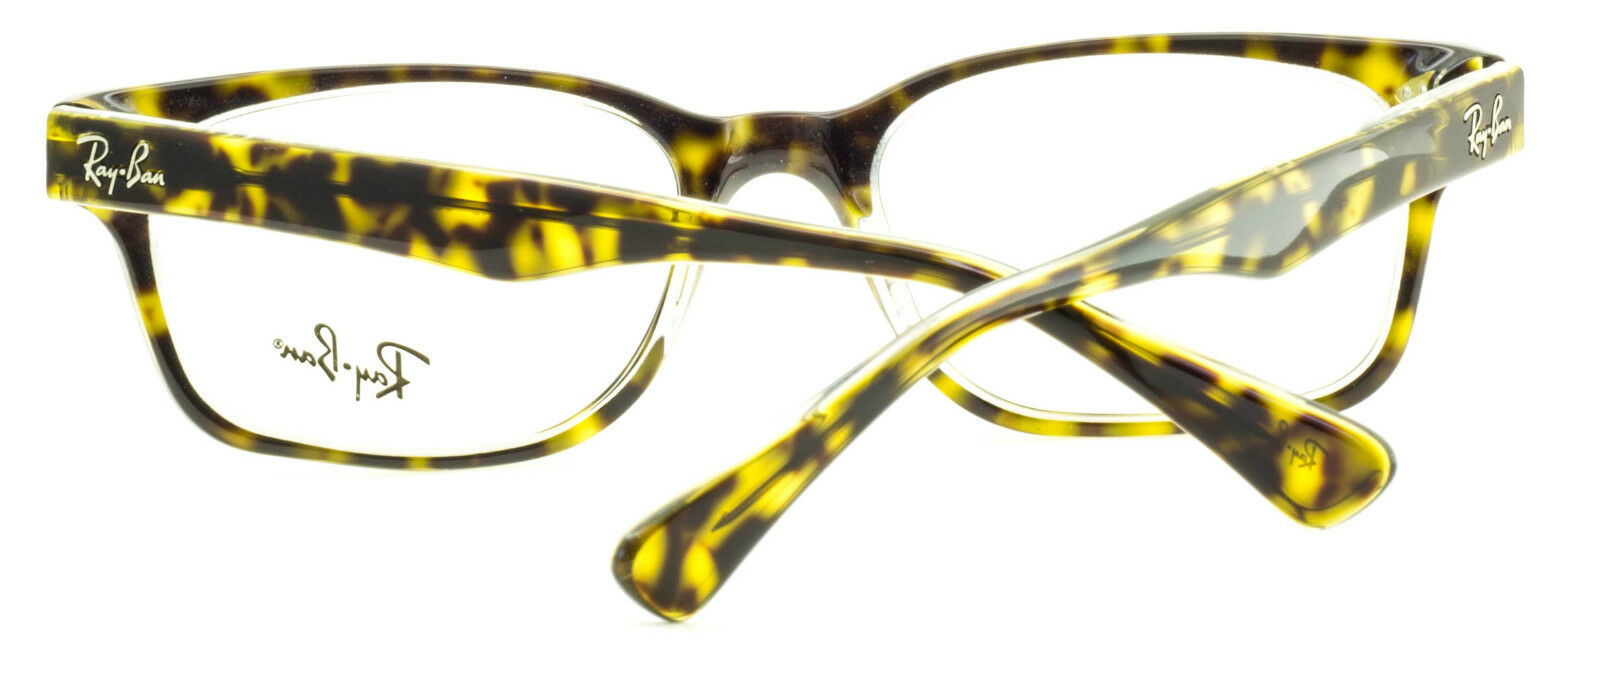 RAY BAN RB 5286 5082 51mm RX Optical FRAMES RAYBAN Glasses Eyewear EyeglassesNew